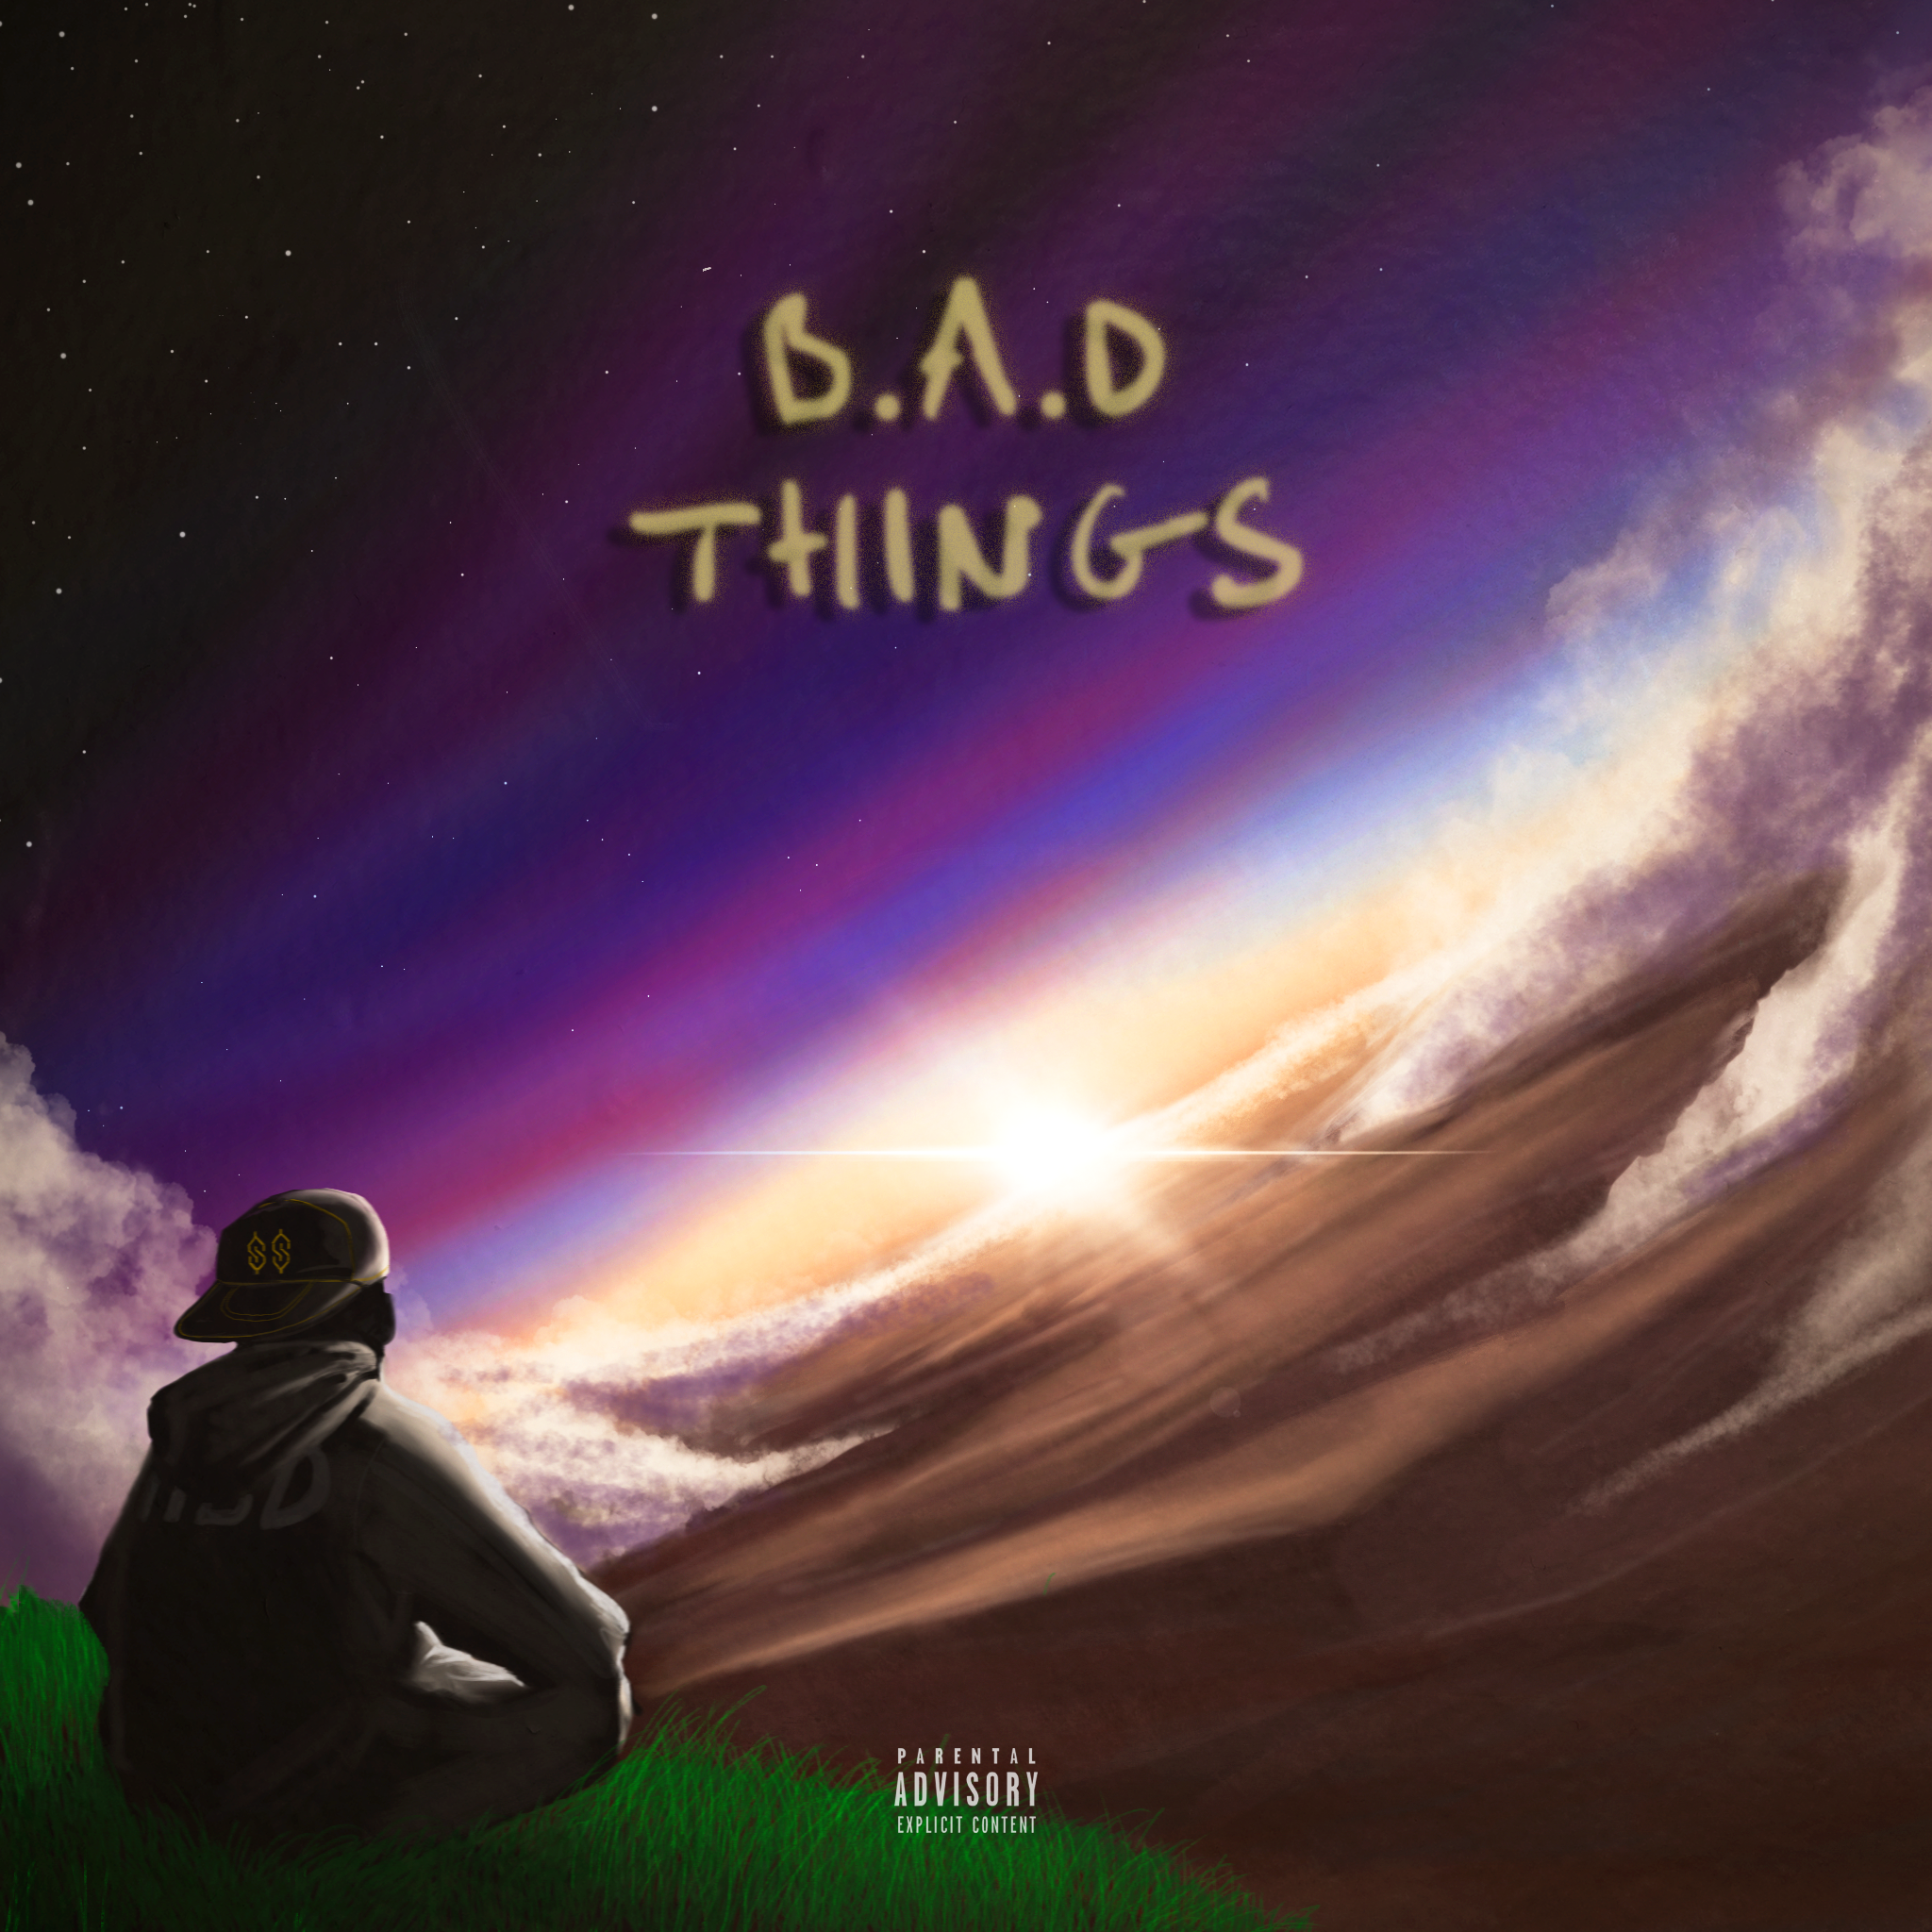 B.A.D. Things